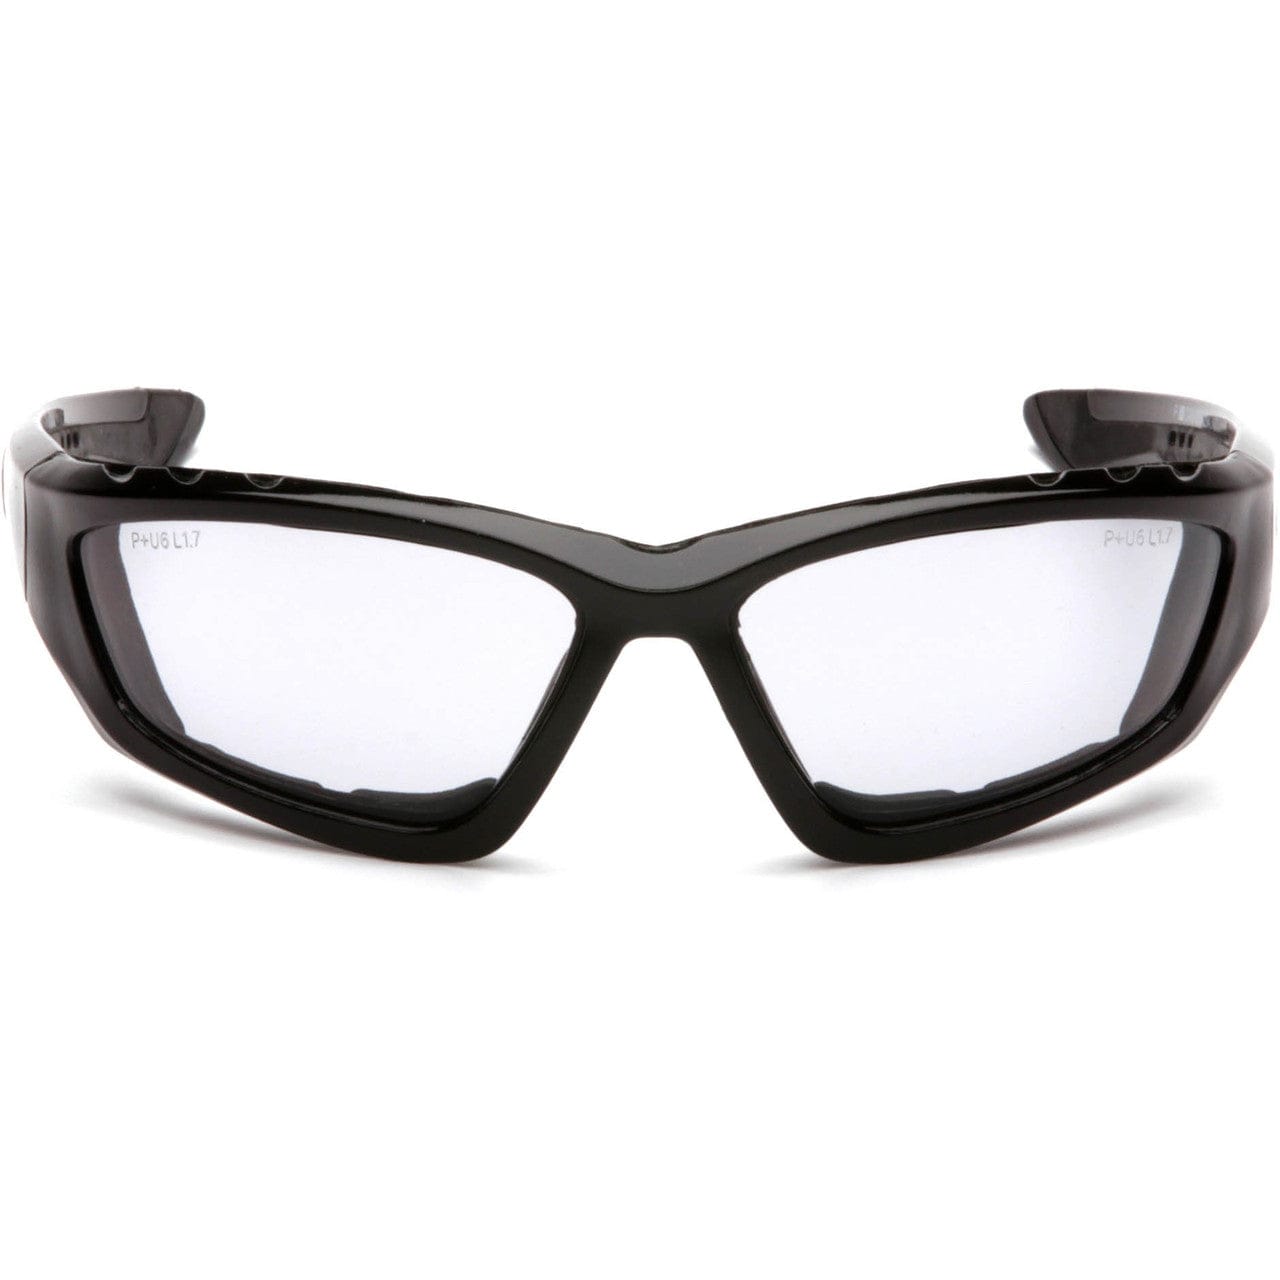 Pyramex Accurist Safety Glasses Black Frame Light Gray Anti Fog Lens